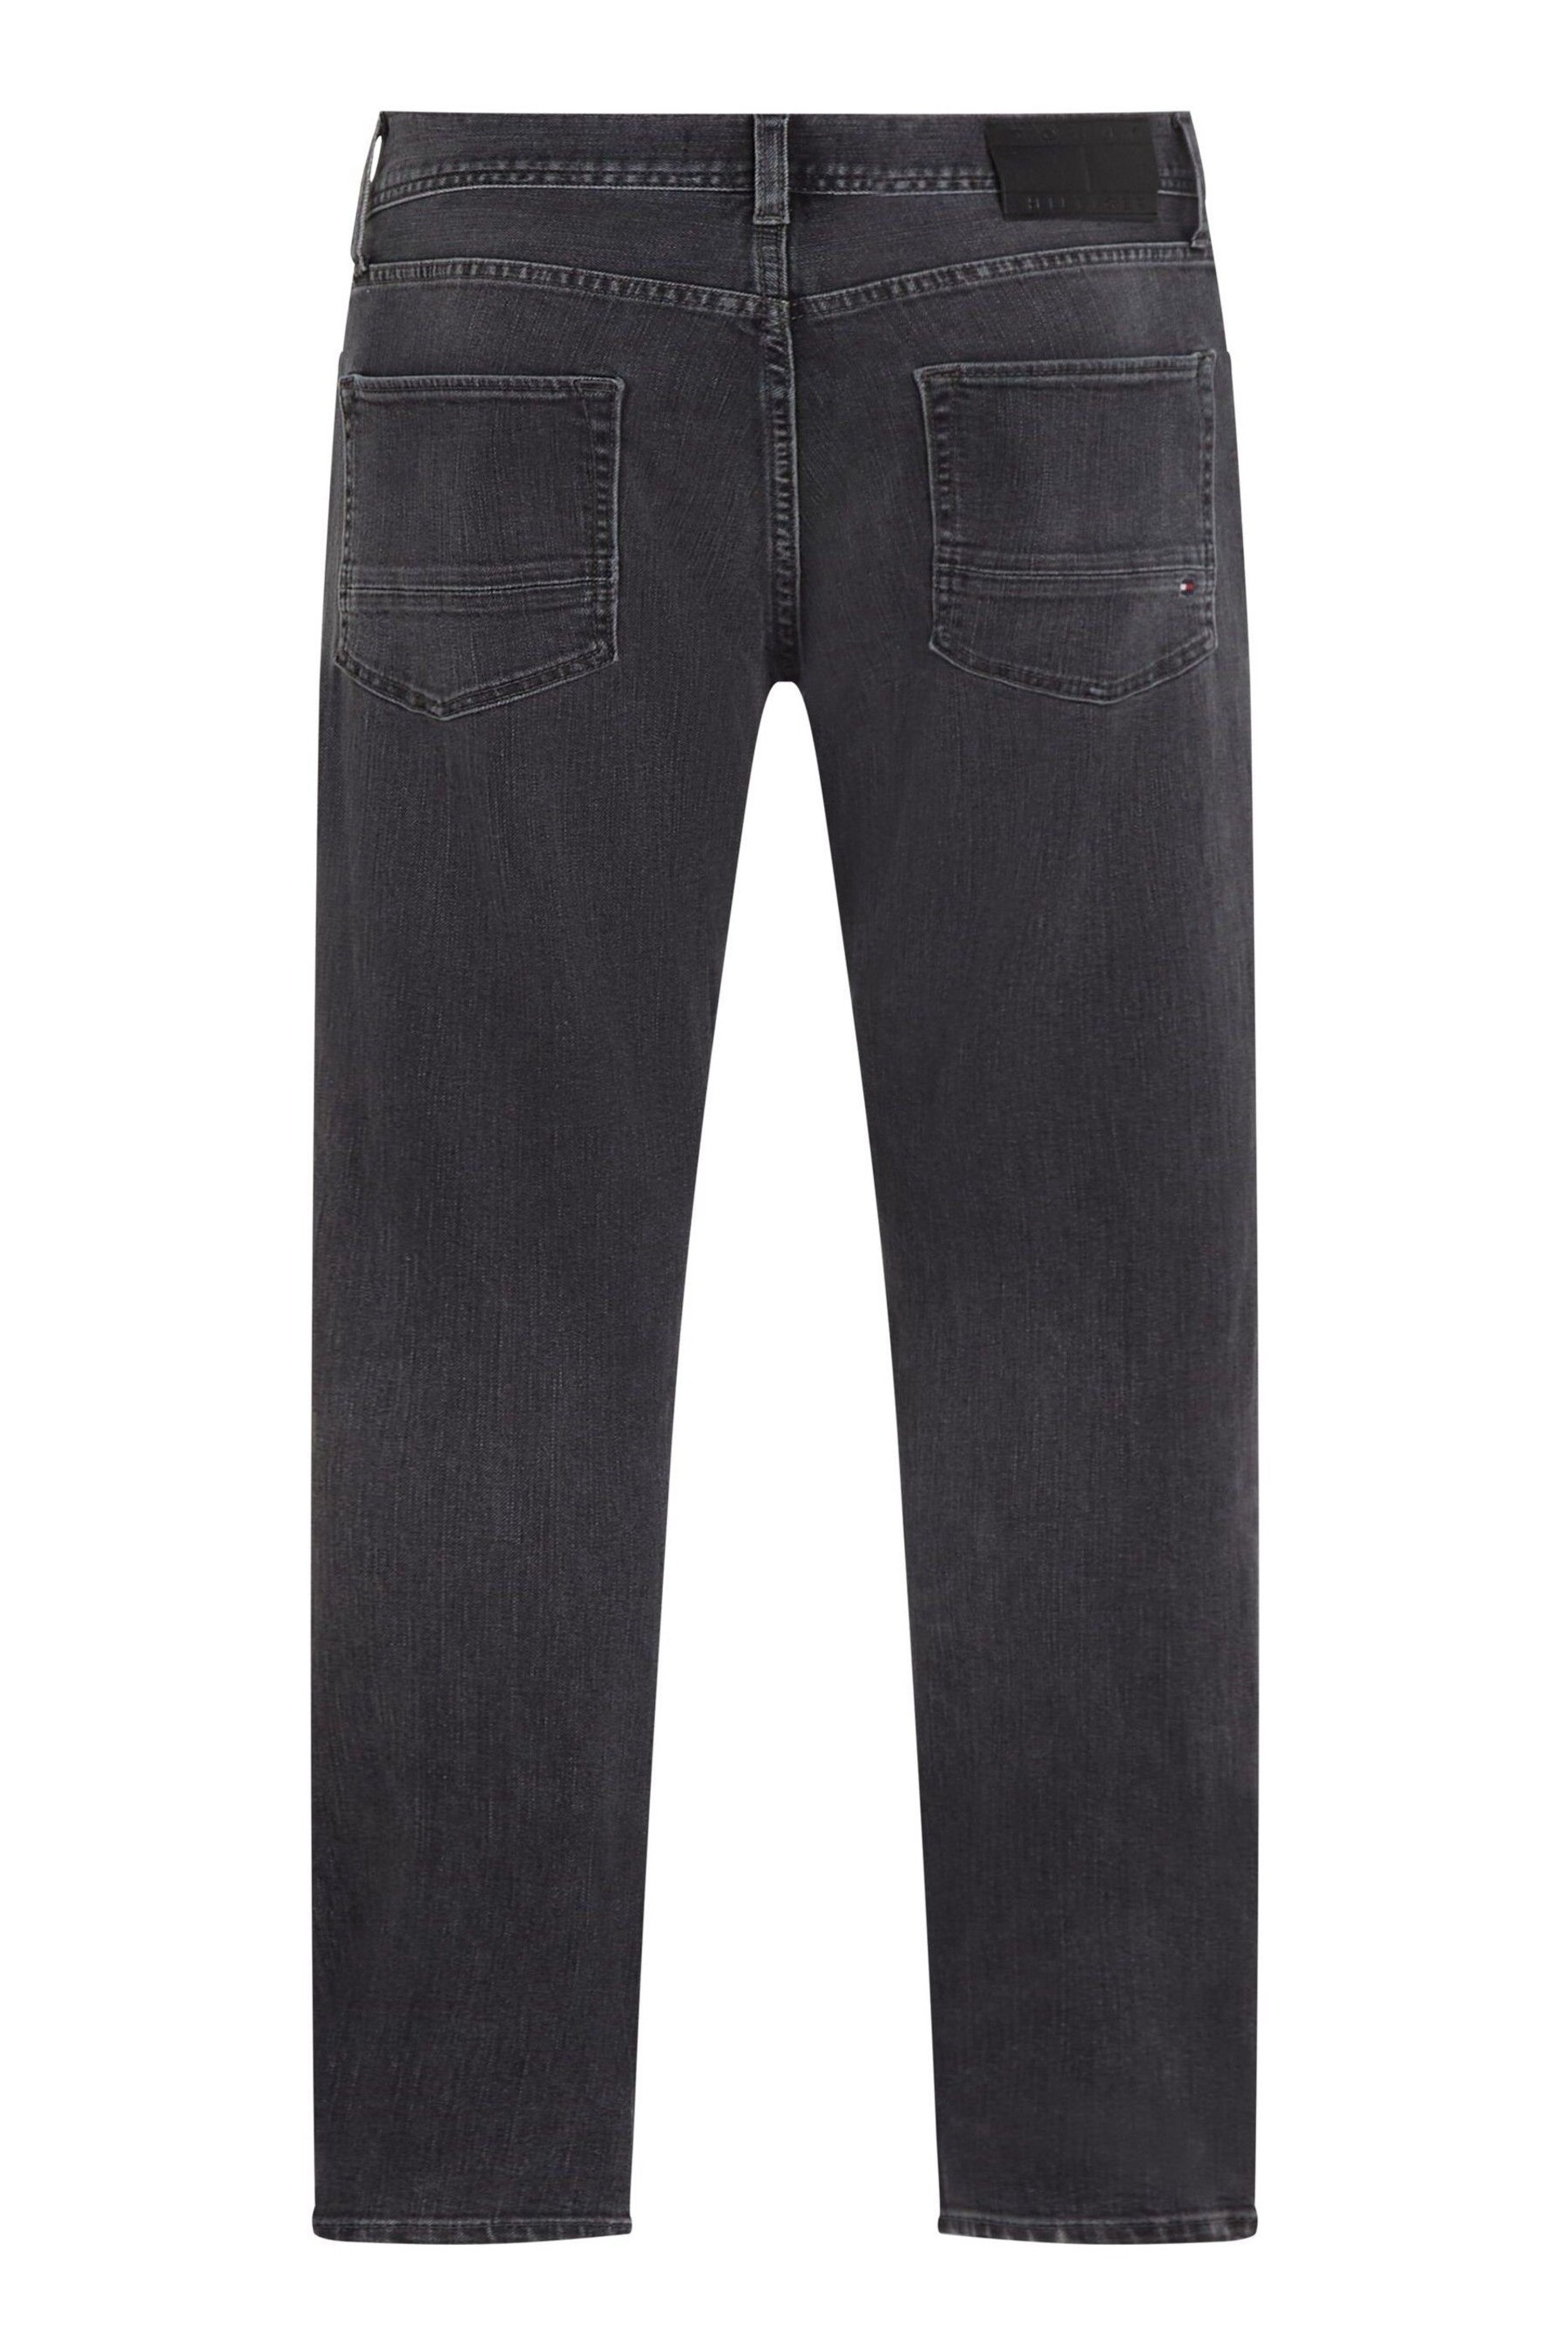 Tommy Hilfiger Denton Straight Black Jeans - Image 6 of 6